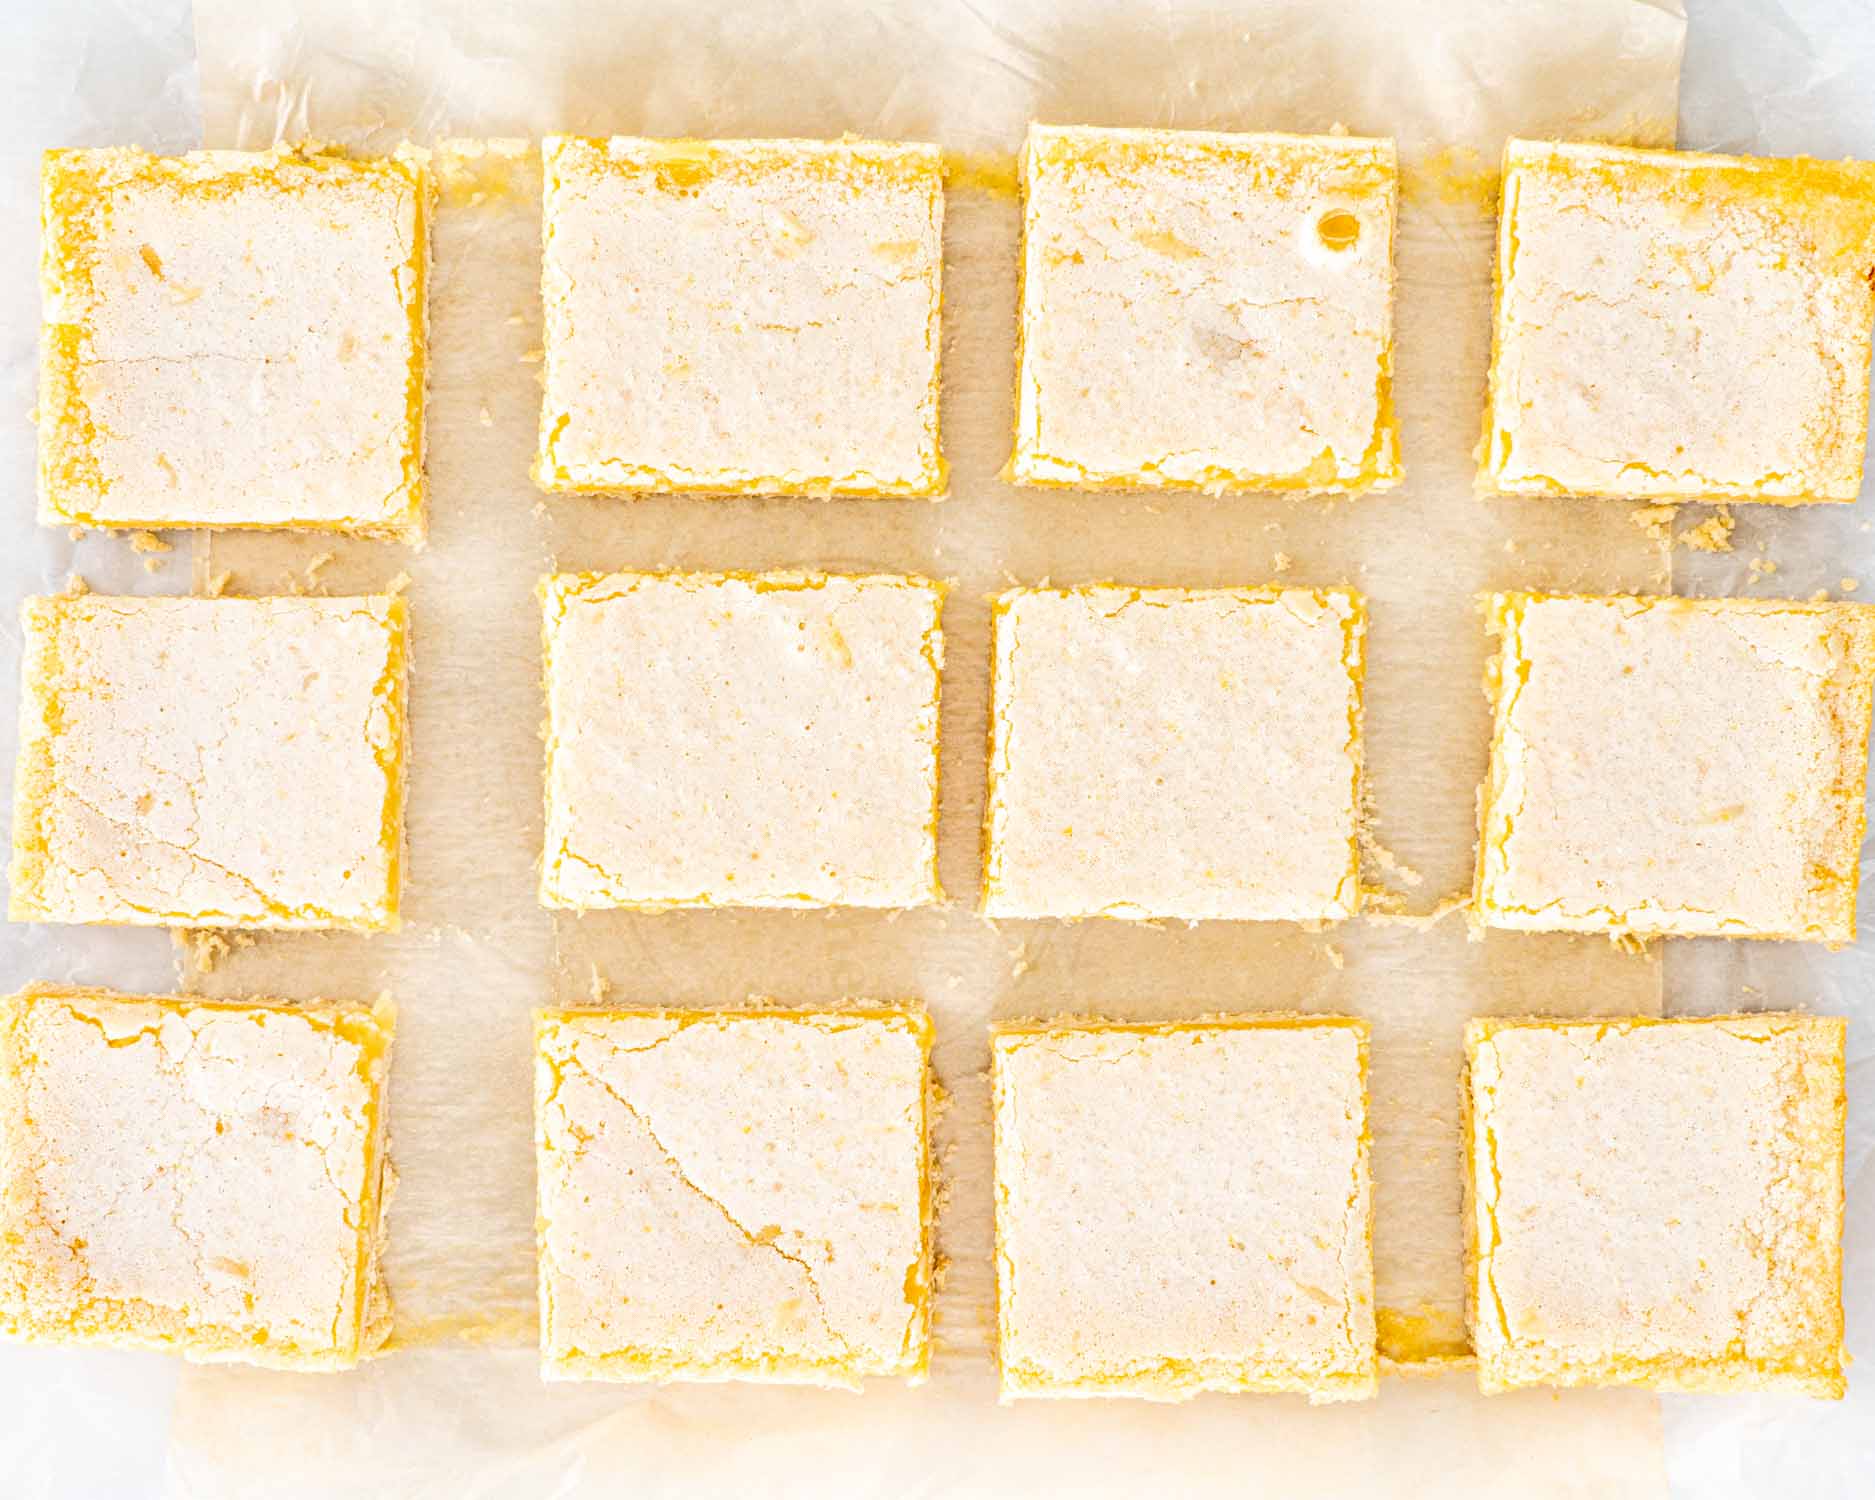 process shots showing how to make lemon bars.